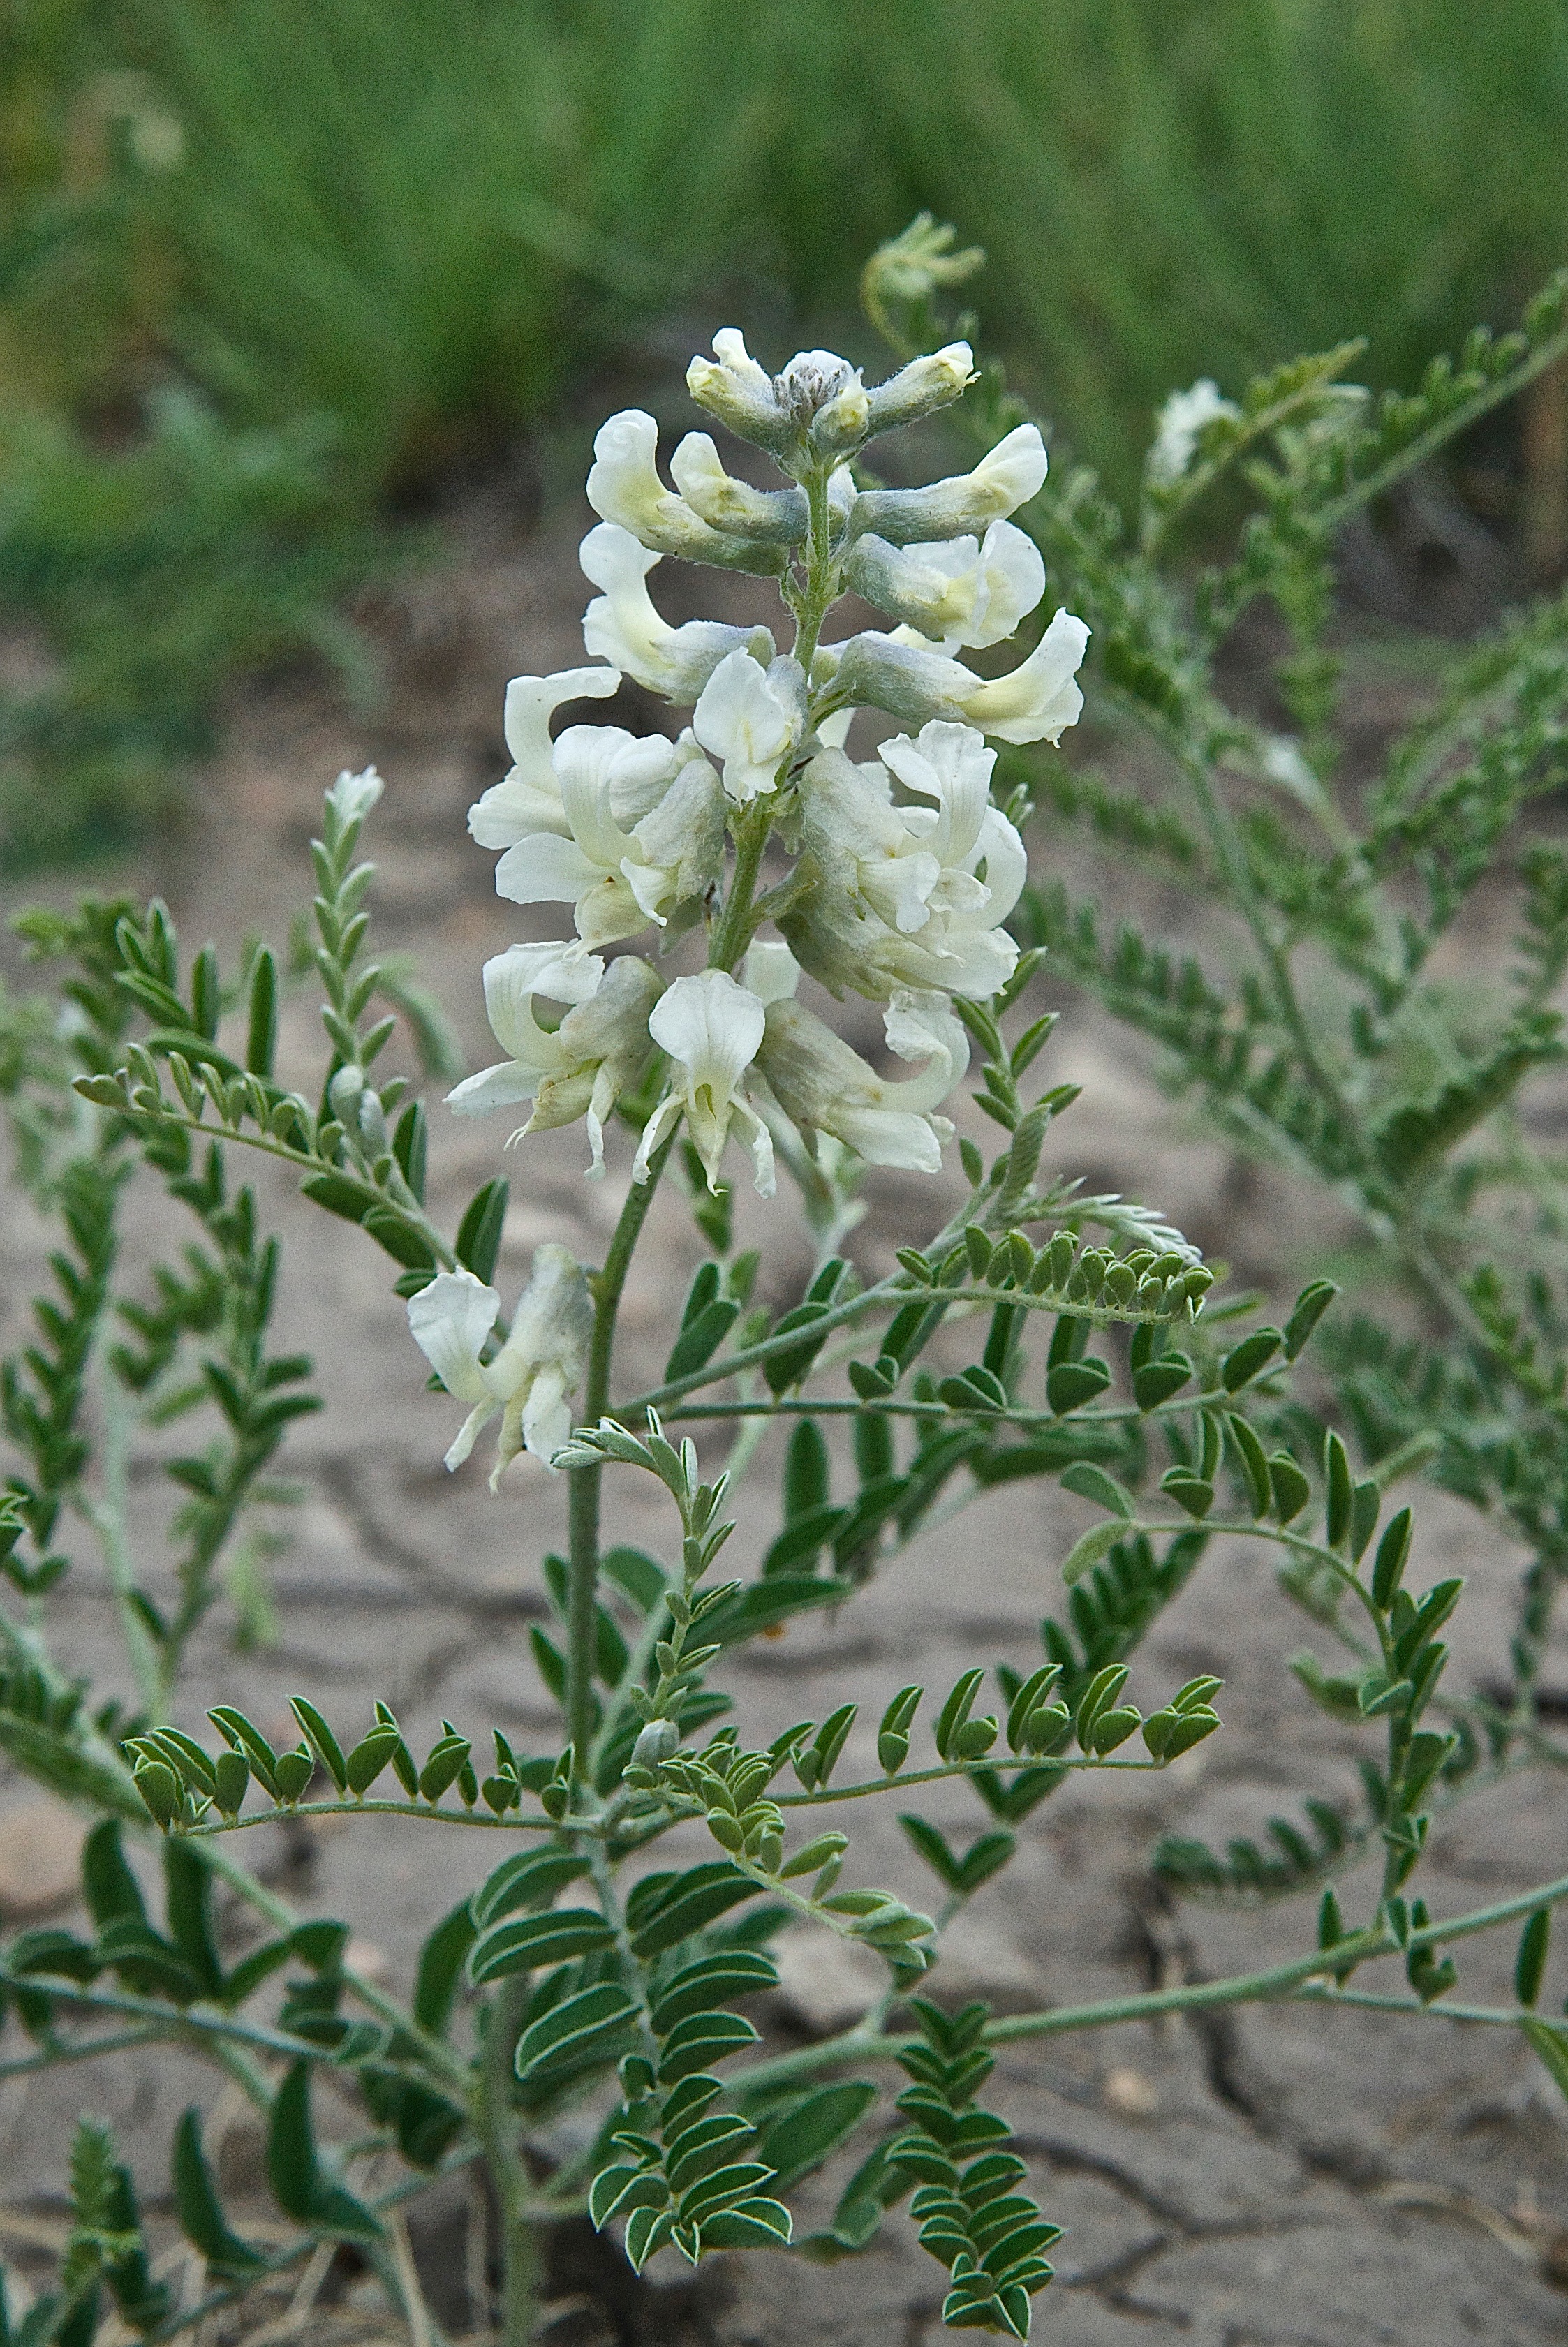 Silky Sophora or White Loco (Sophora nuttalliana)